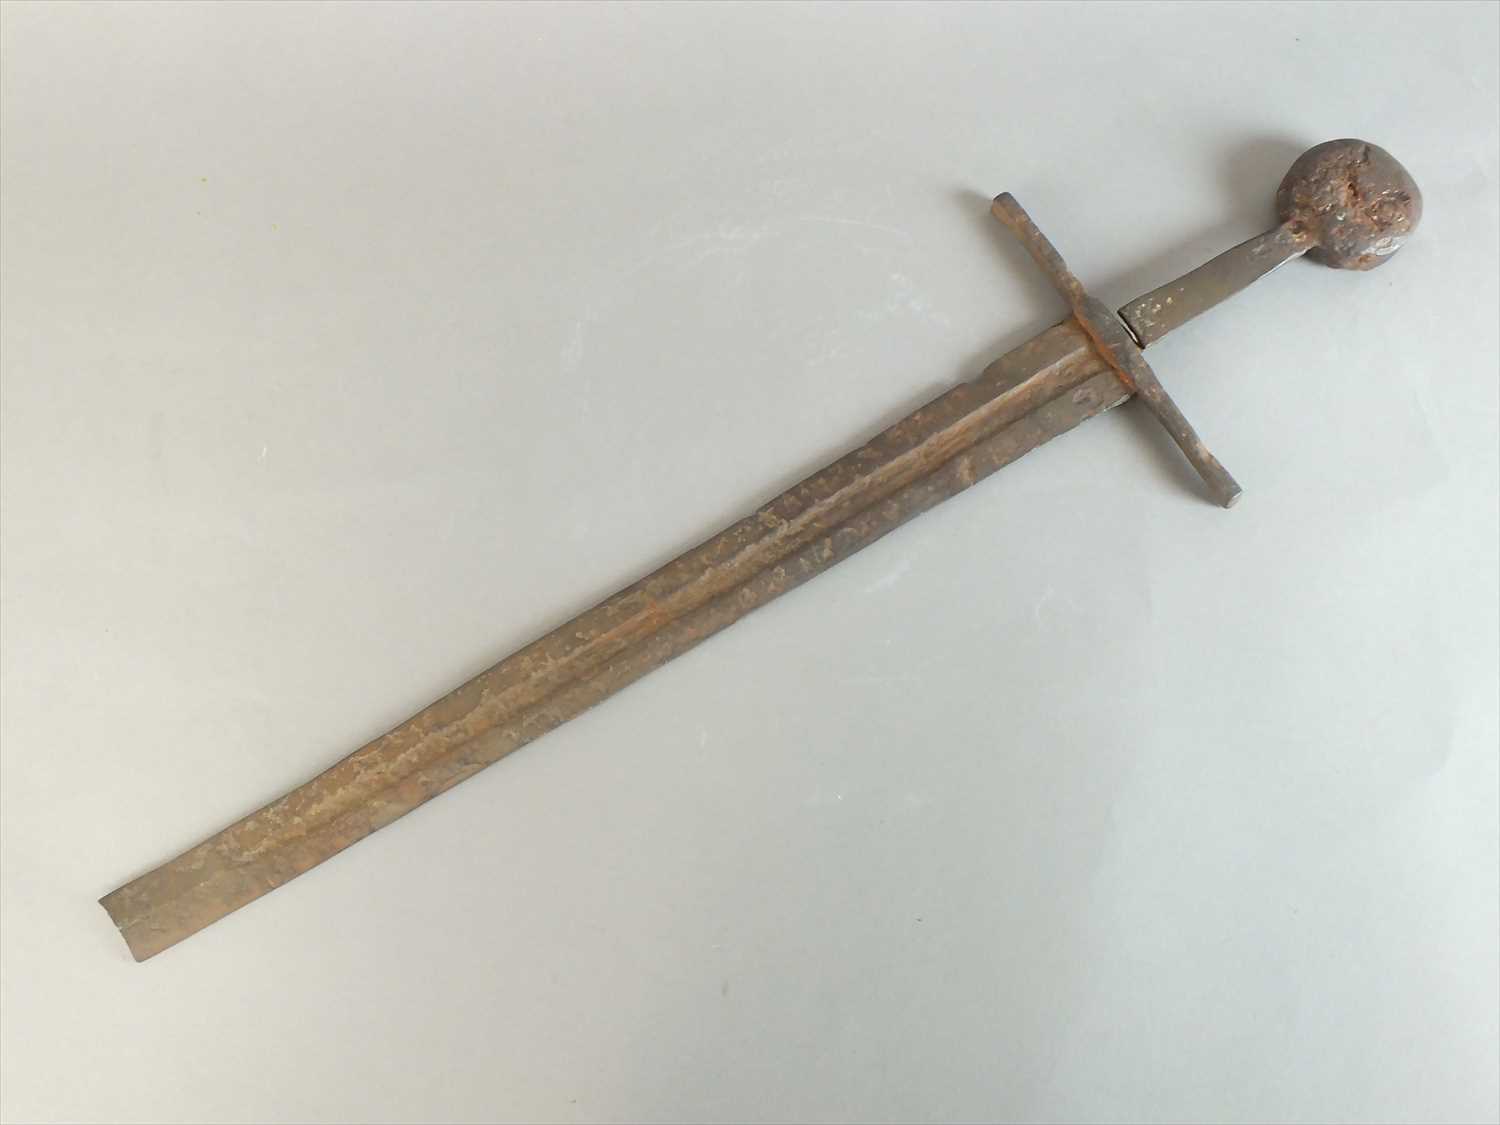 A 12th-13th century medieval English sword